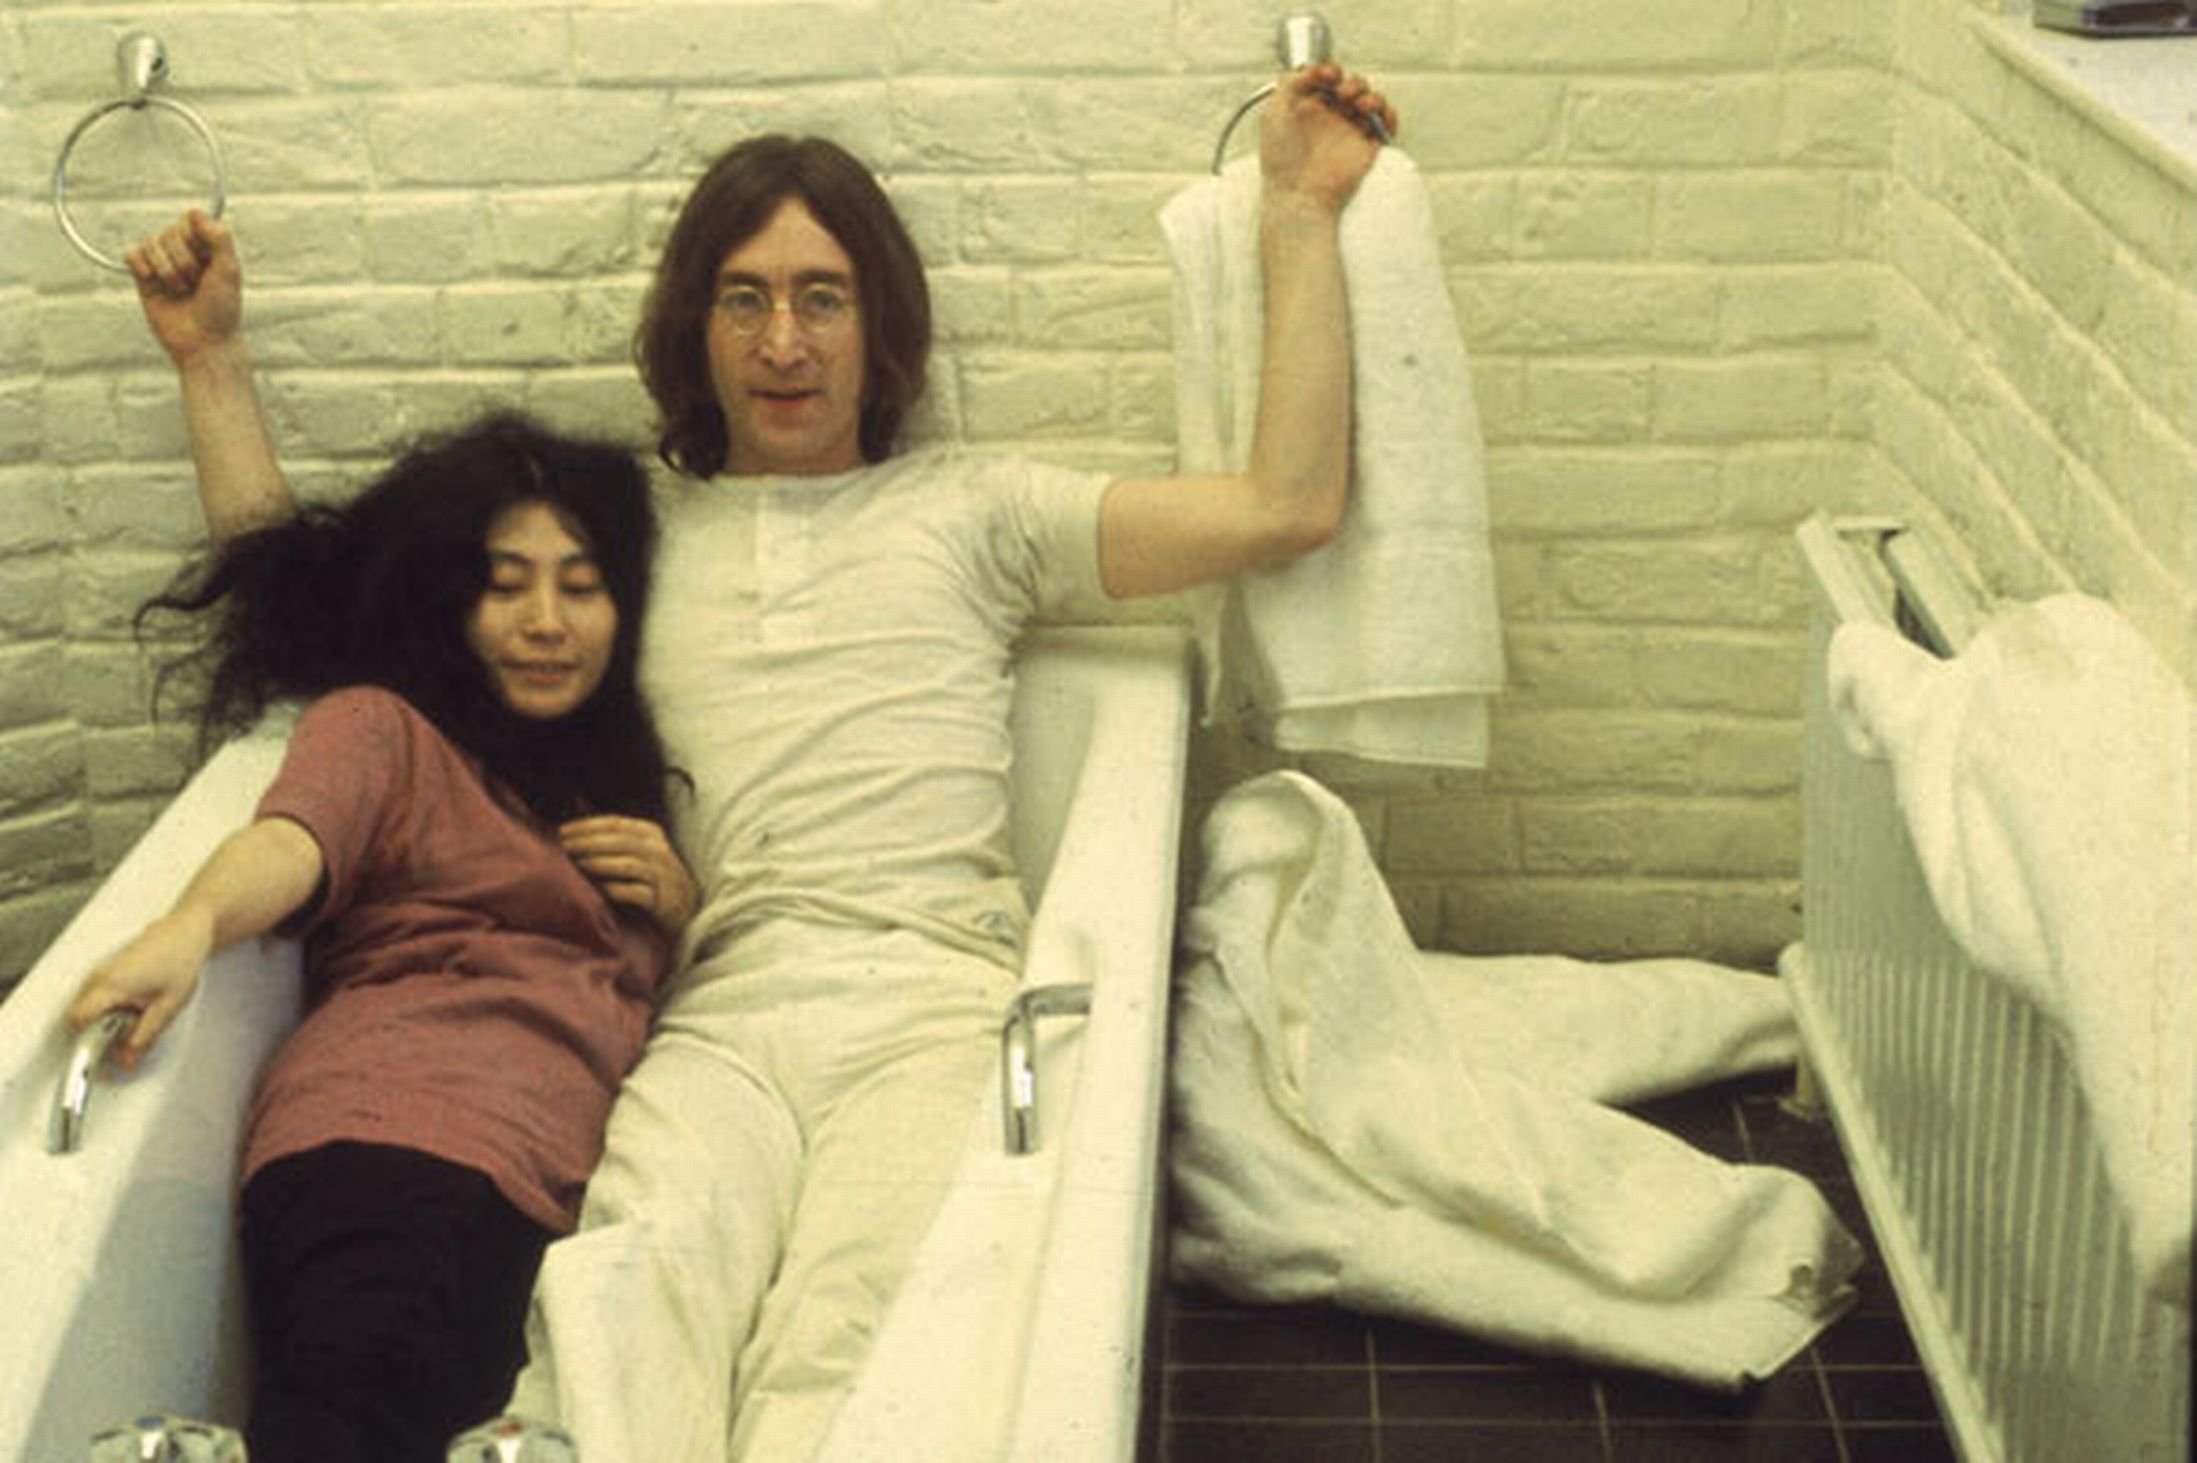 personaggi famosi in vasca da bagno - Yoko Ono e John Lennon